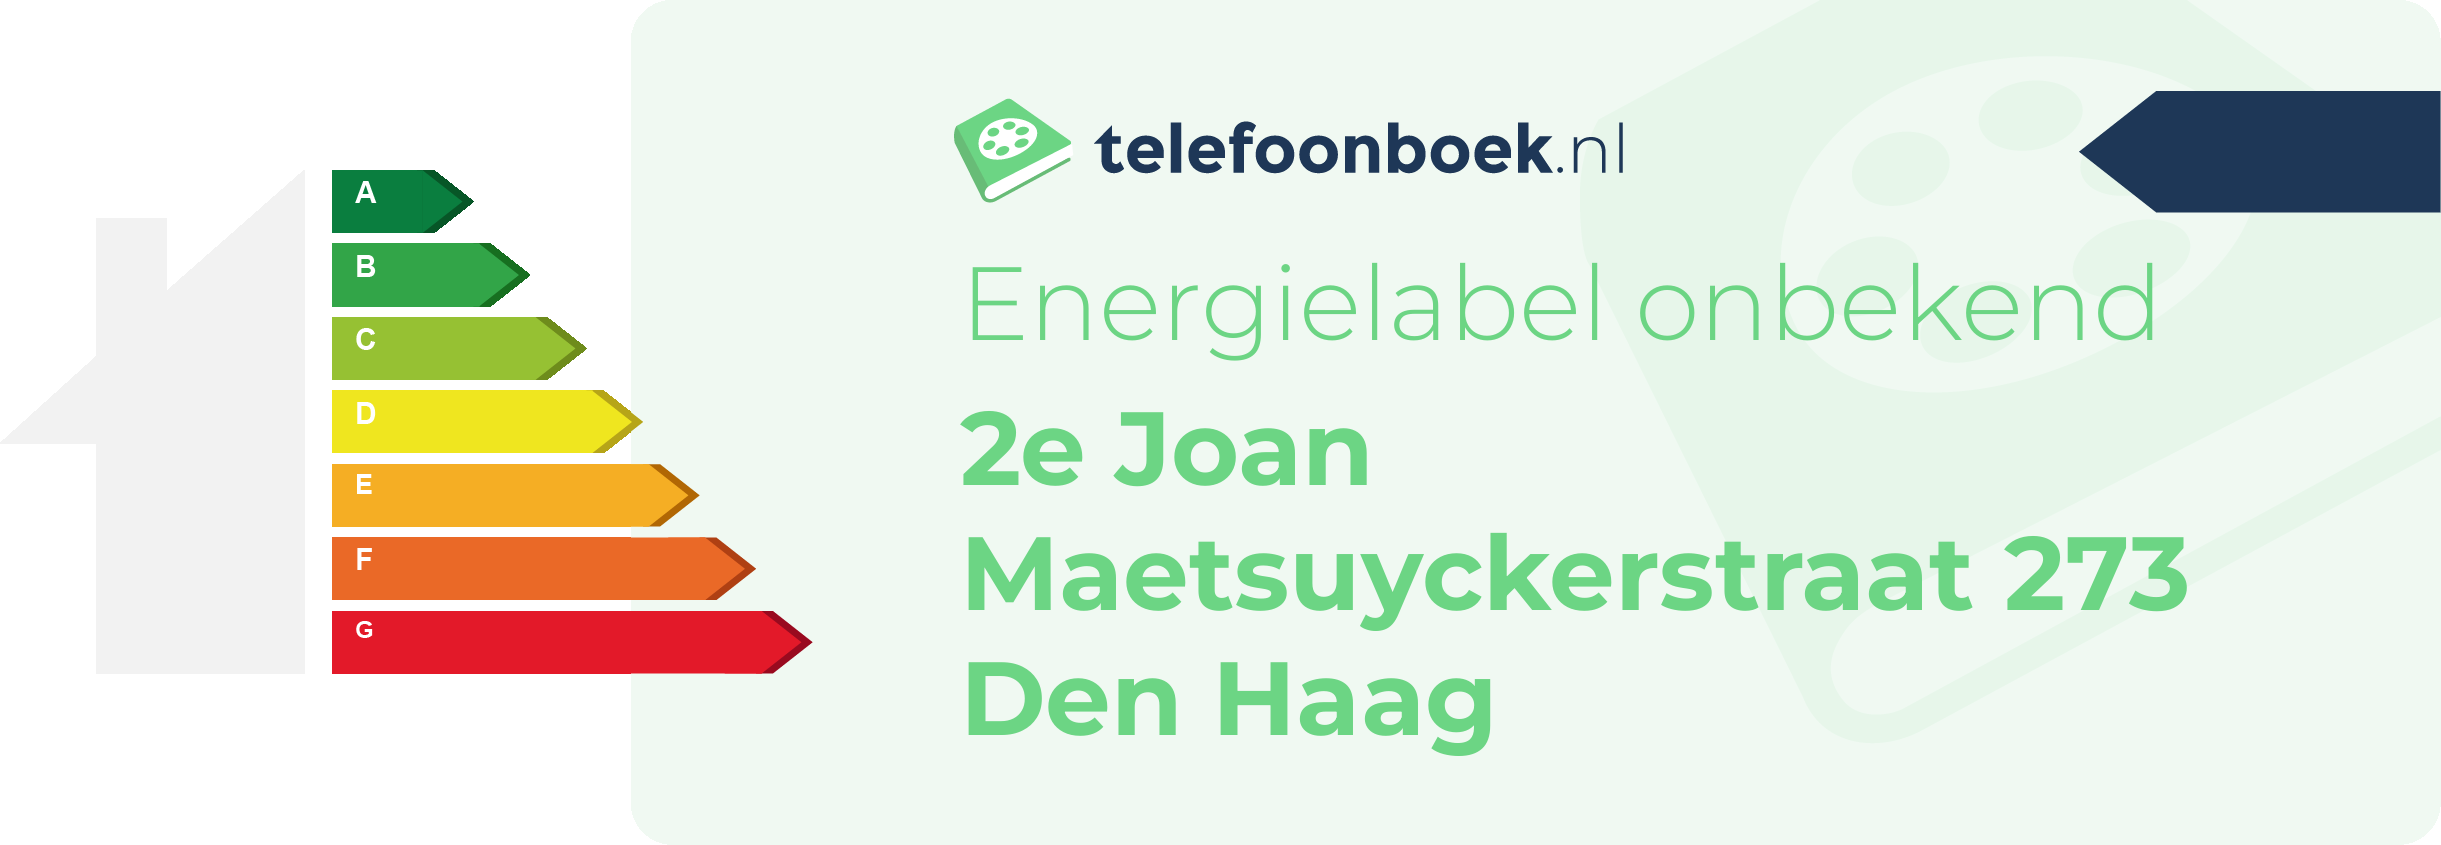 Energielabel 2e Joan Maetsuyckerstraat 273 Den Haag